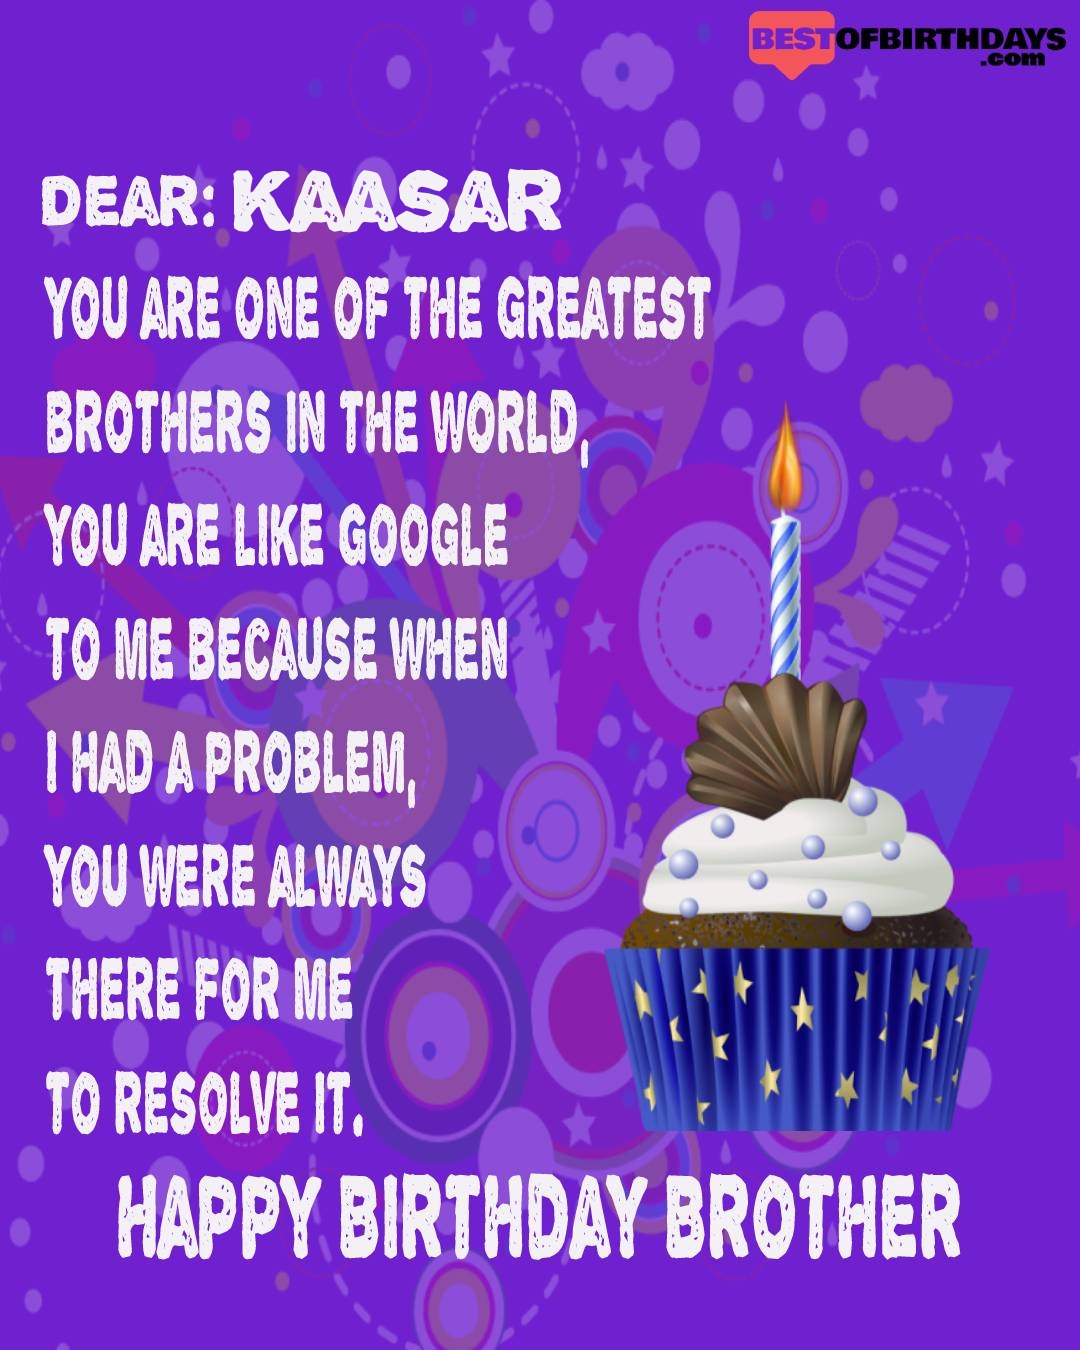 Happy birthday kaasar bhai brother bro